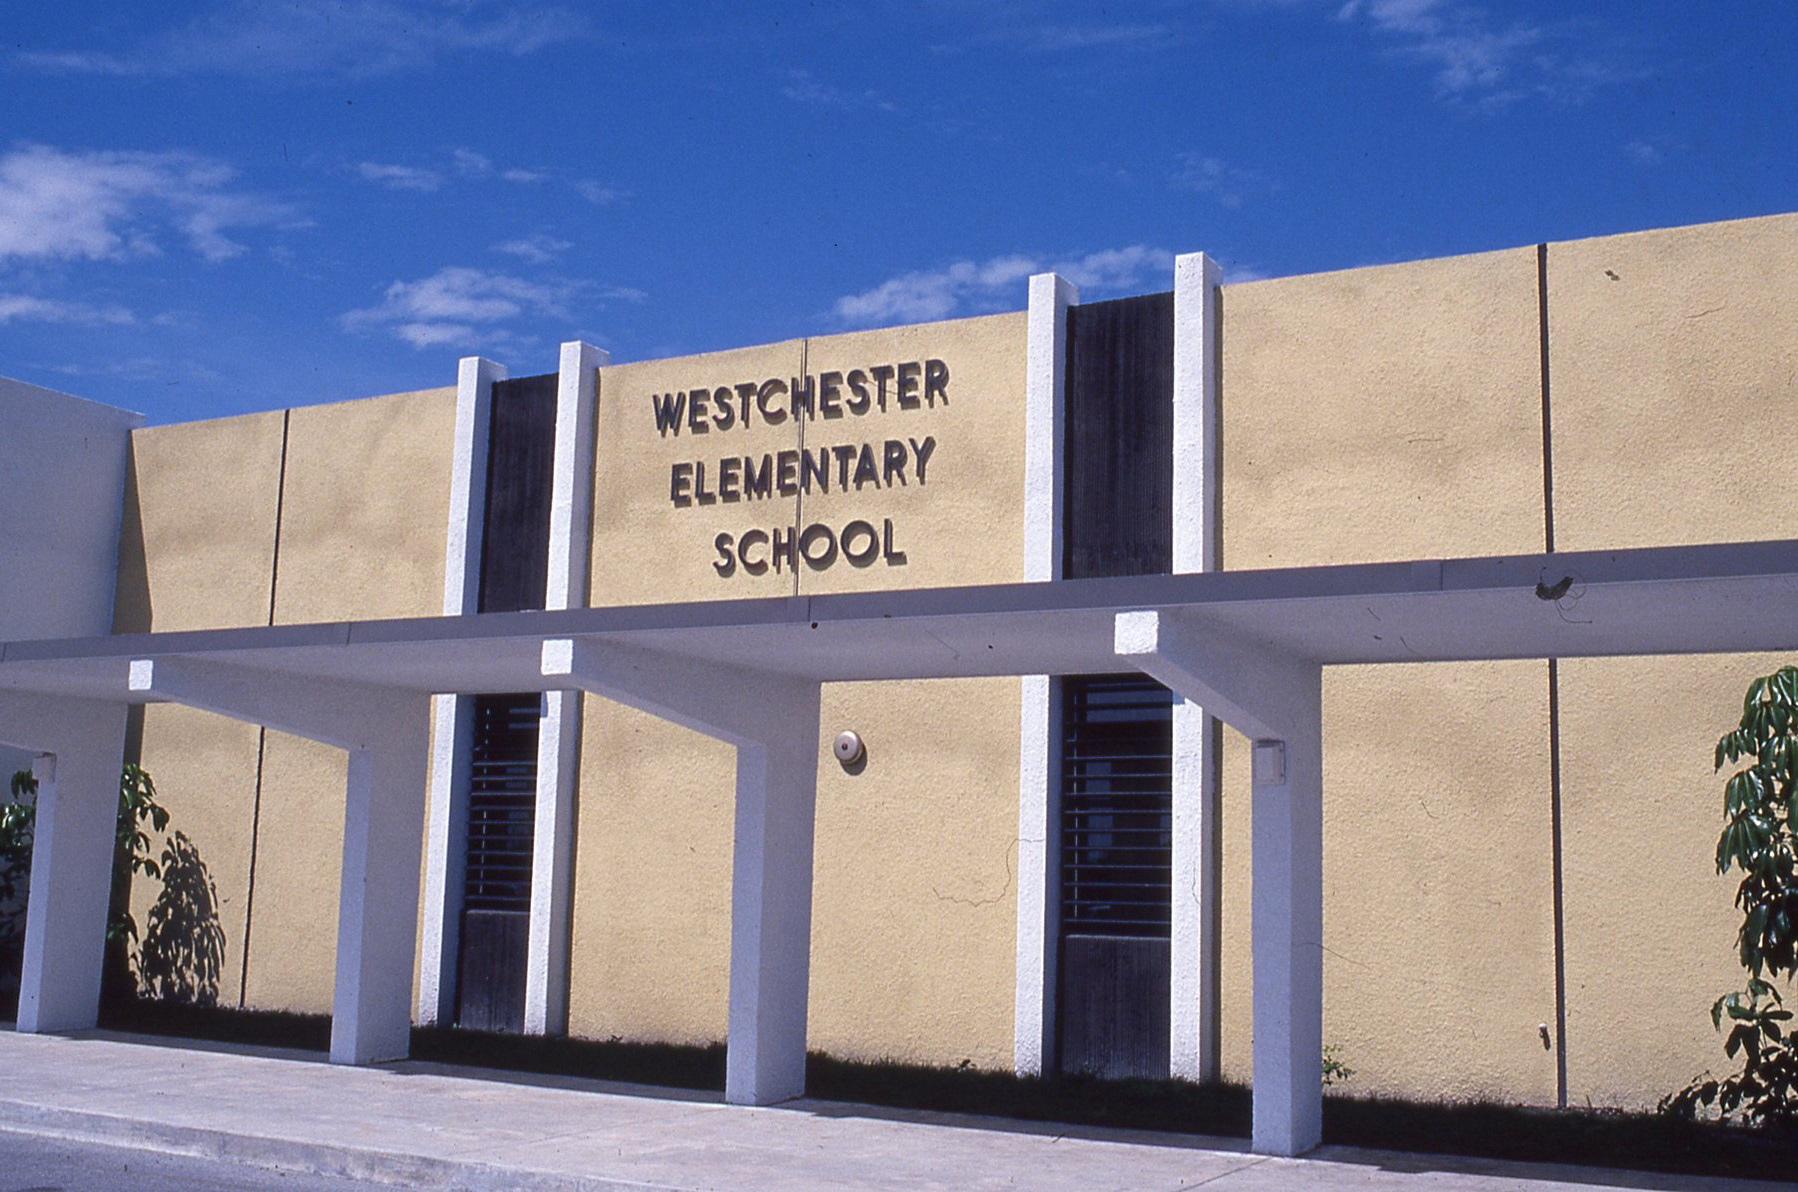 Westchester Elementary School